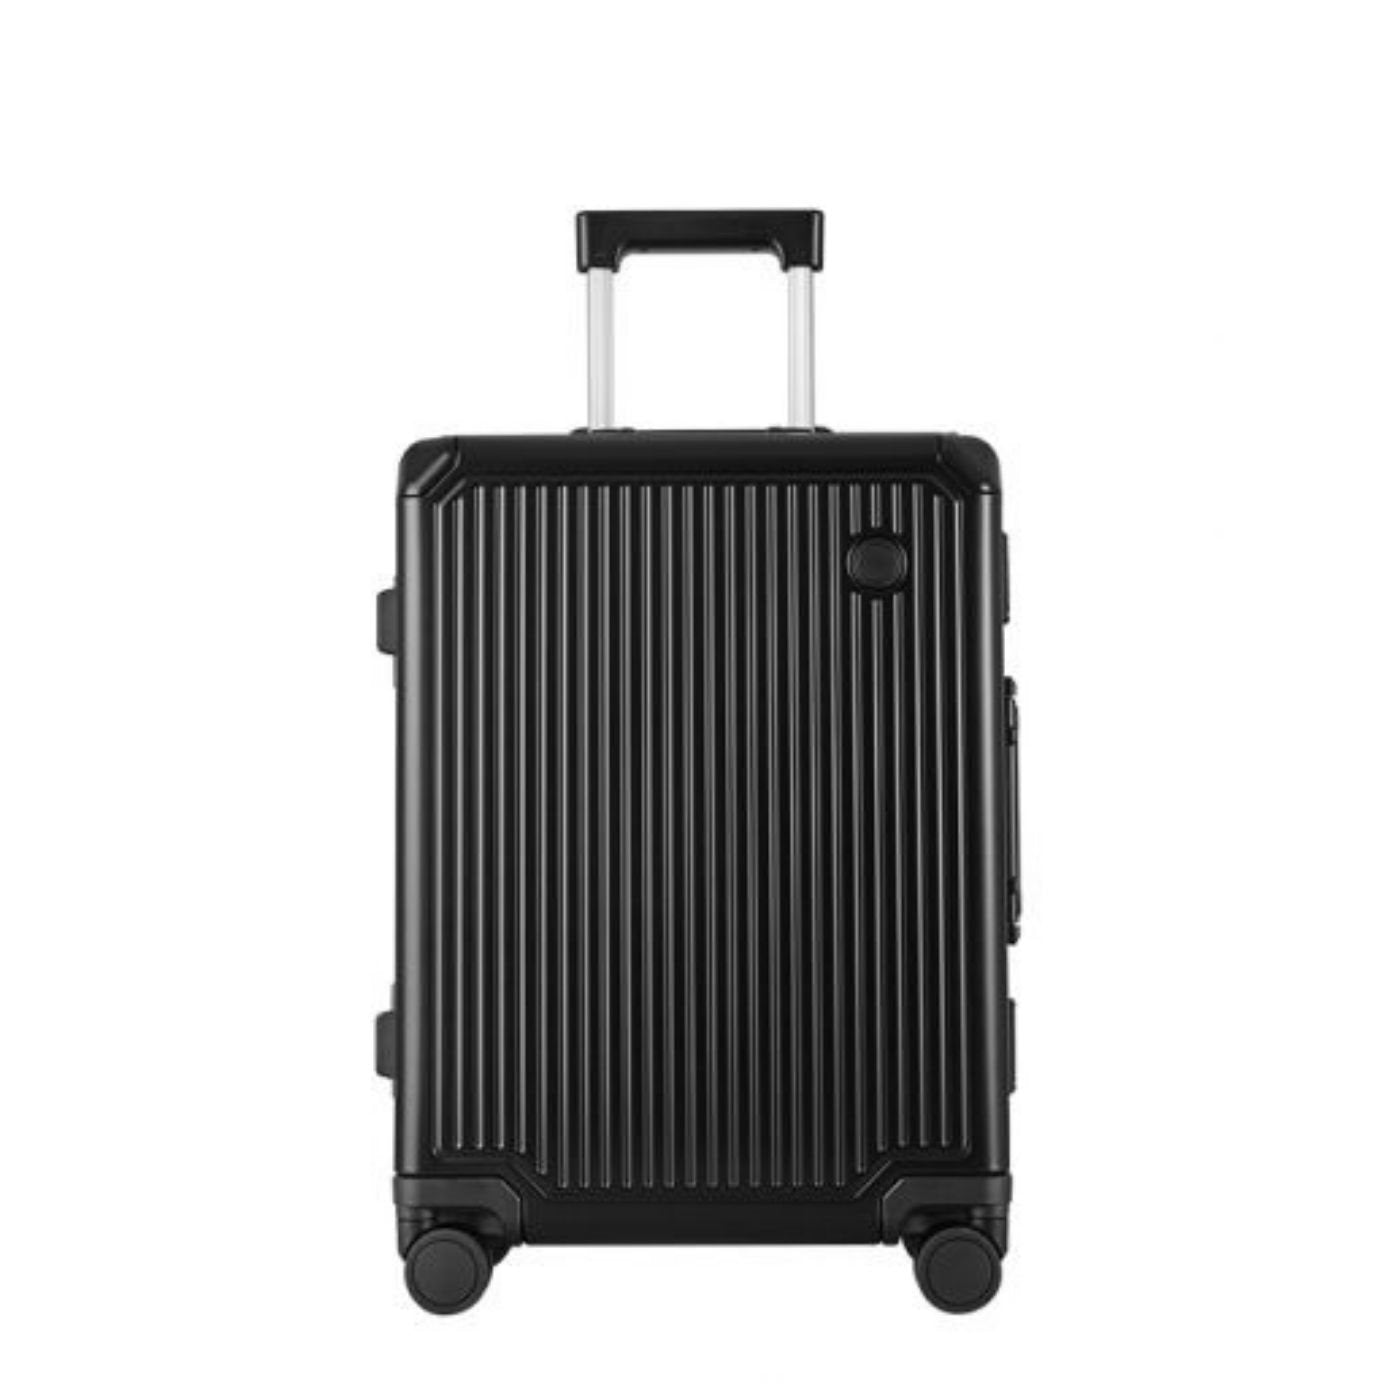 Echolac Shogun Classic - S - Aluminum Black Handbagage Koffer - Reisartikelen-nl